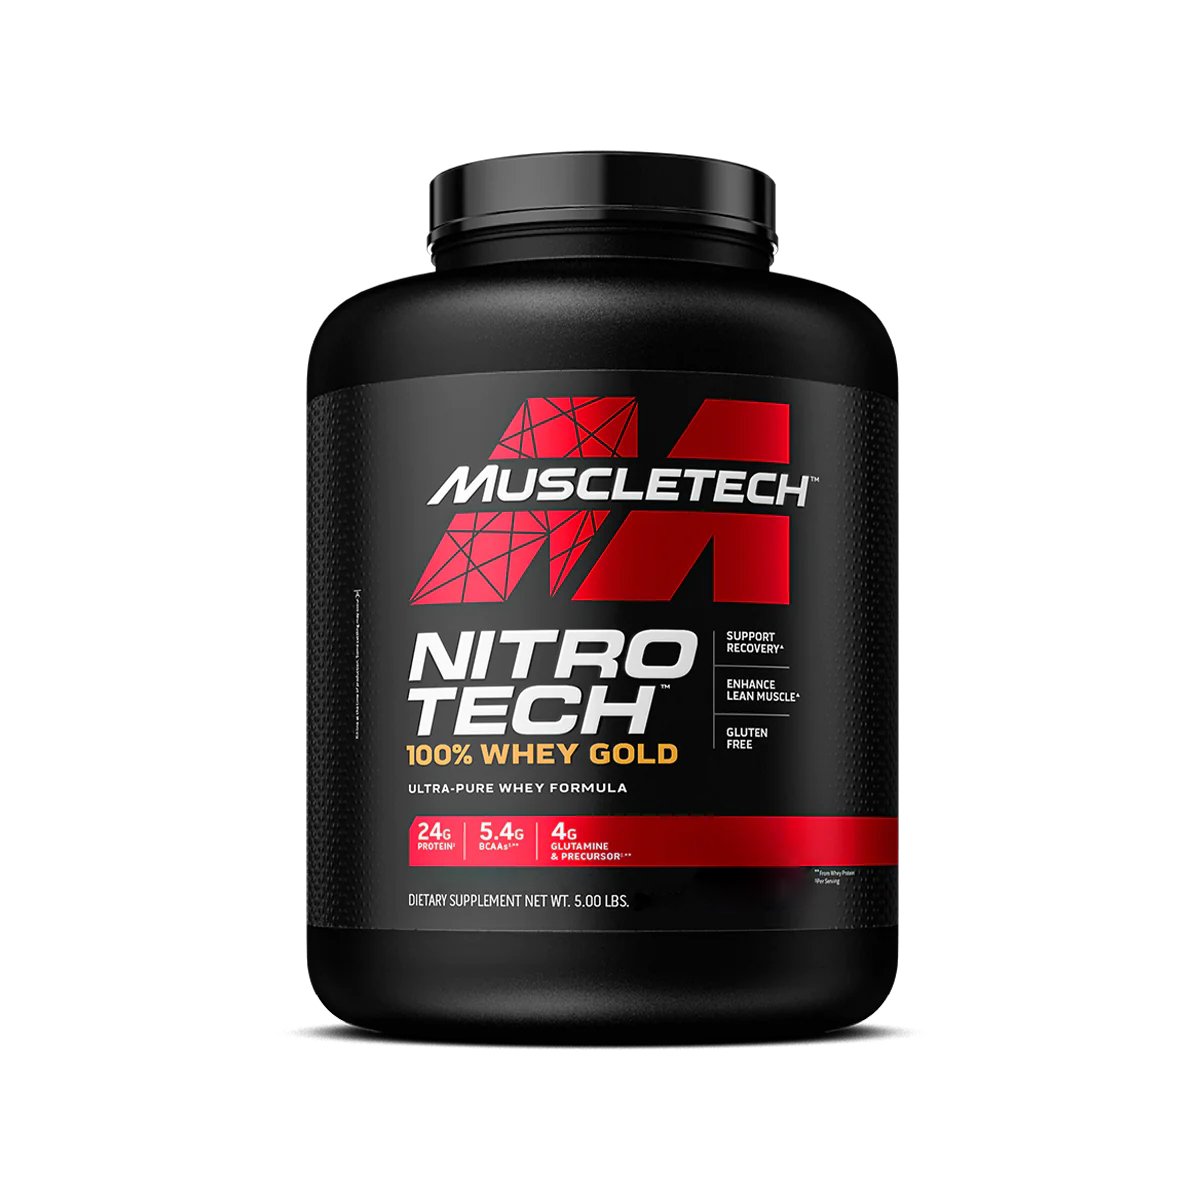 Протеин Muscletech Nitro Tech 100% Whey Gold, 2.27 кг Двойной шоколад,  ml, MuscleTech. Protein. Mass Gain recovery Anti-catabolic properties 